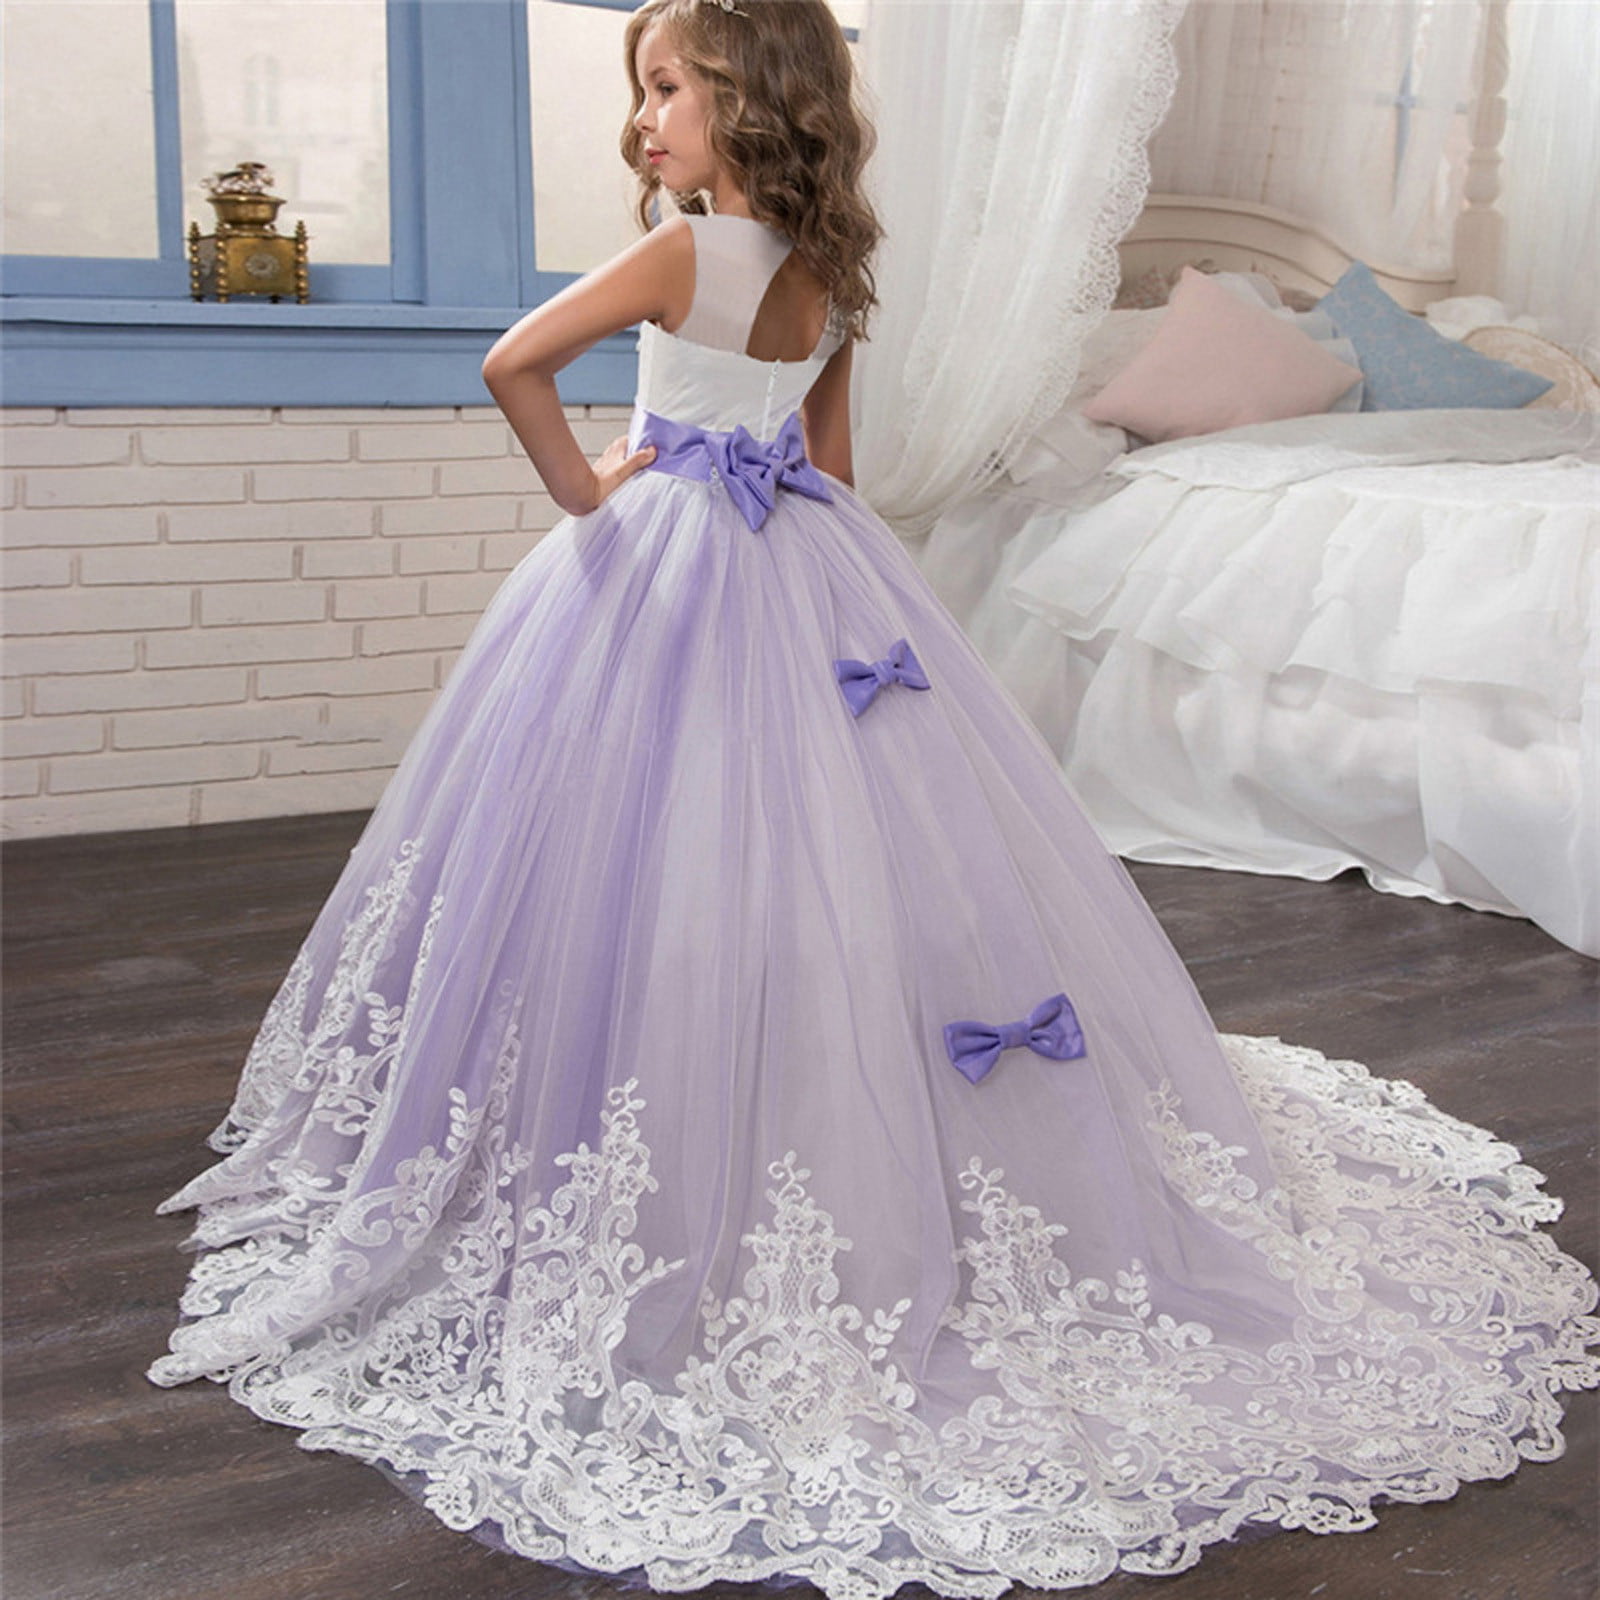 Princess Dress Pictures | Download Free Images on Unsplash